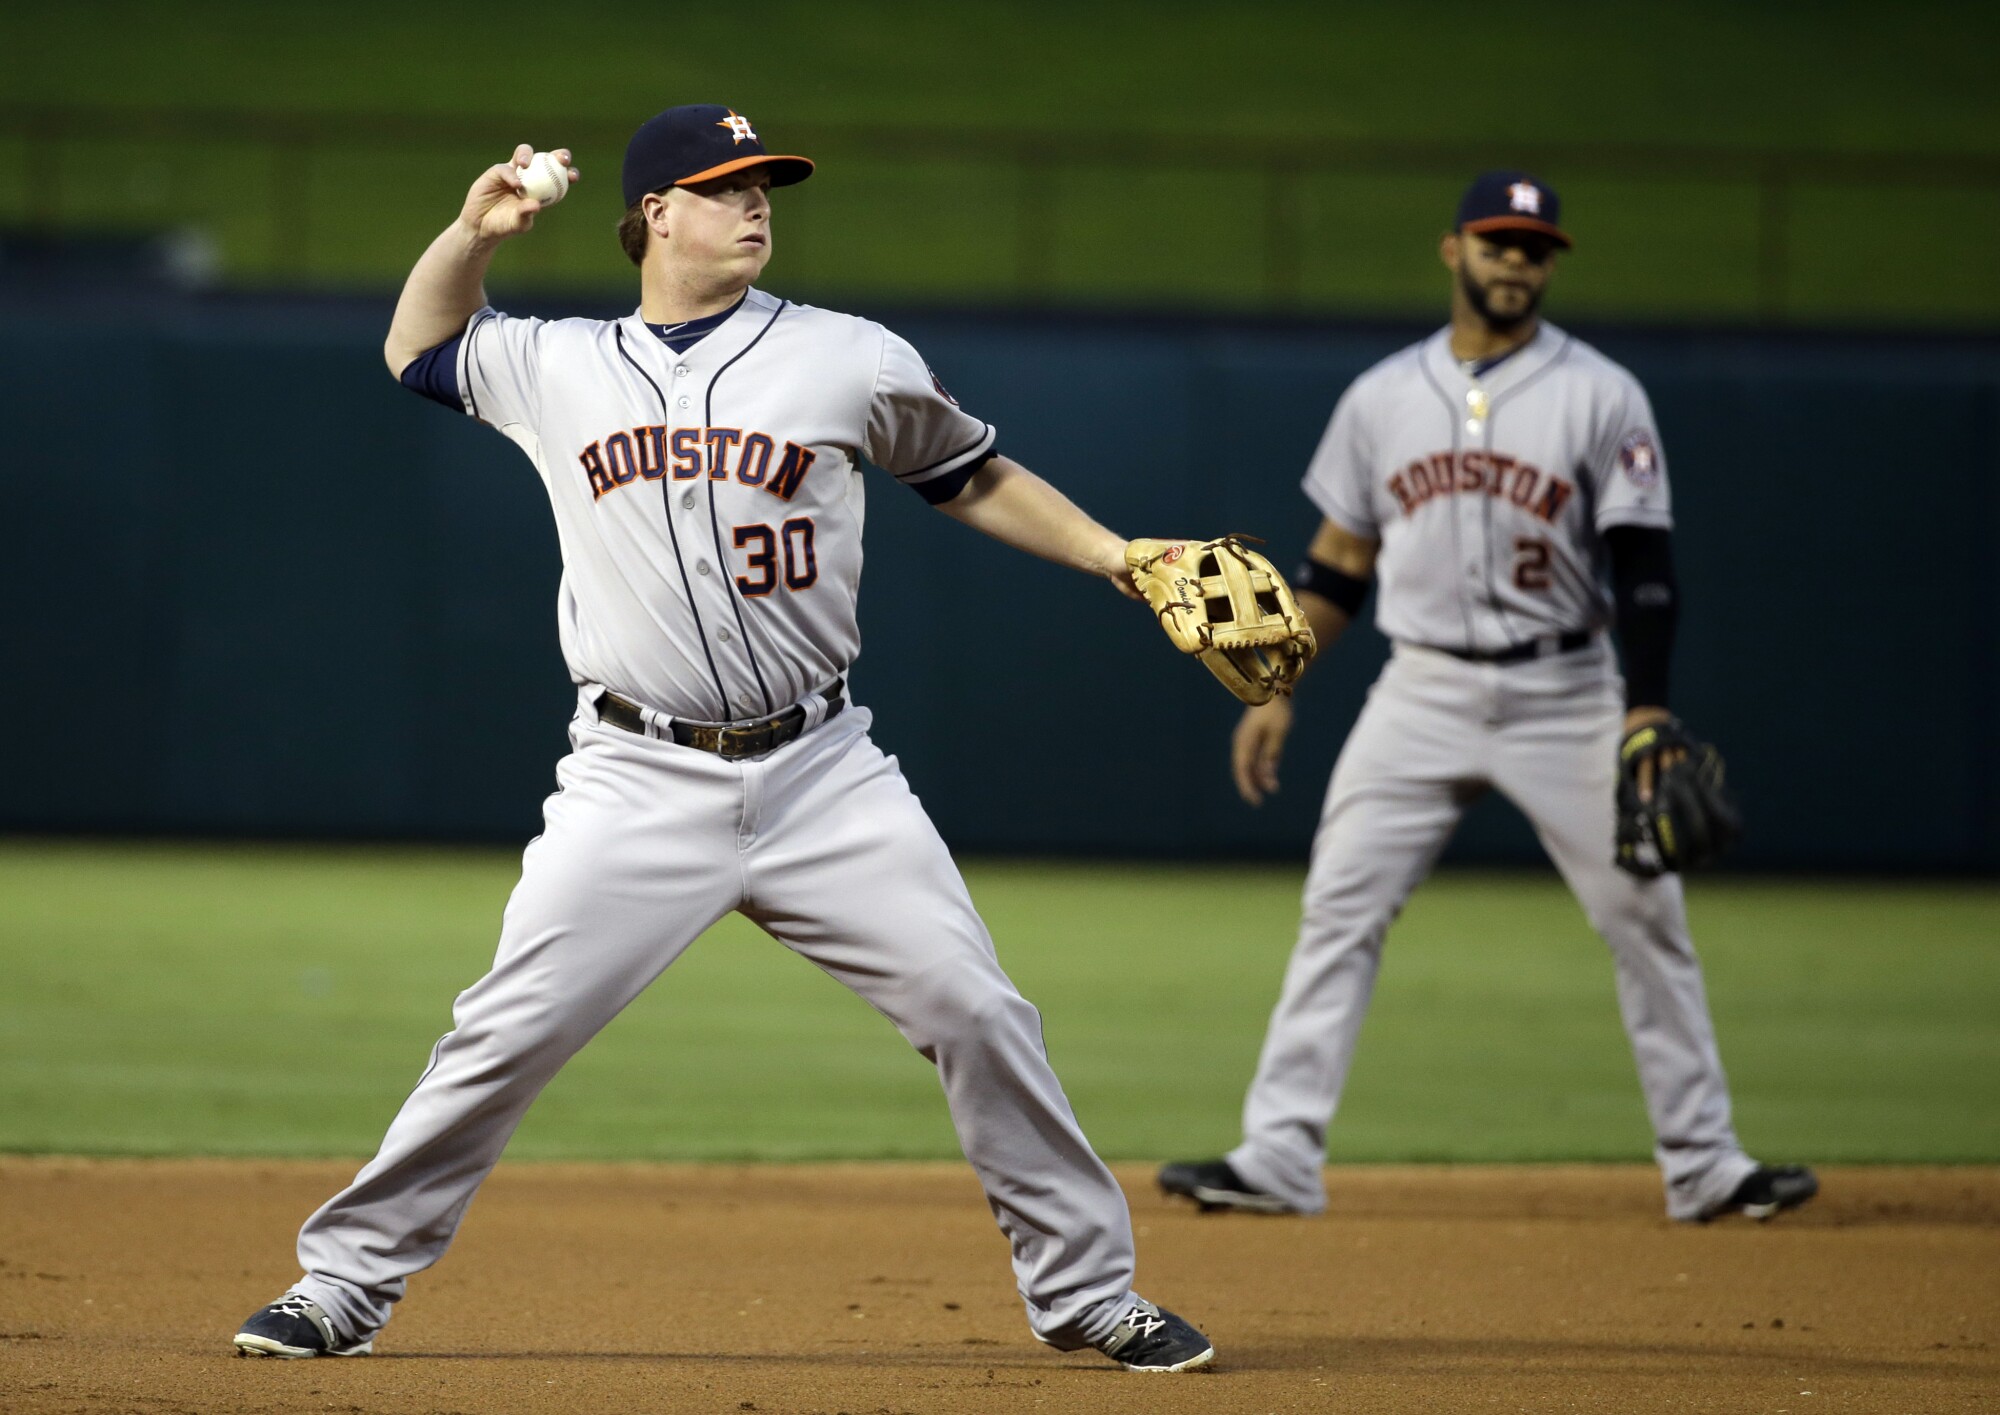 Houston Astros third baseman Matt Dominguez throws for first place against the Texas Rangers in September 2014.